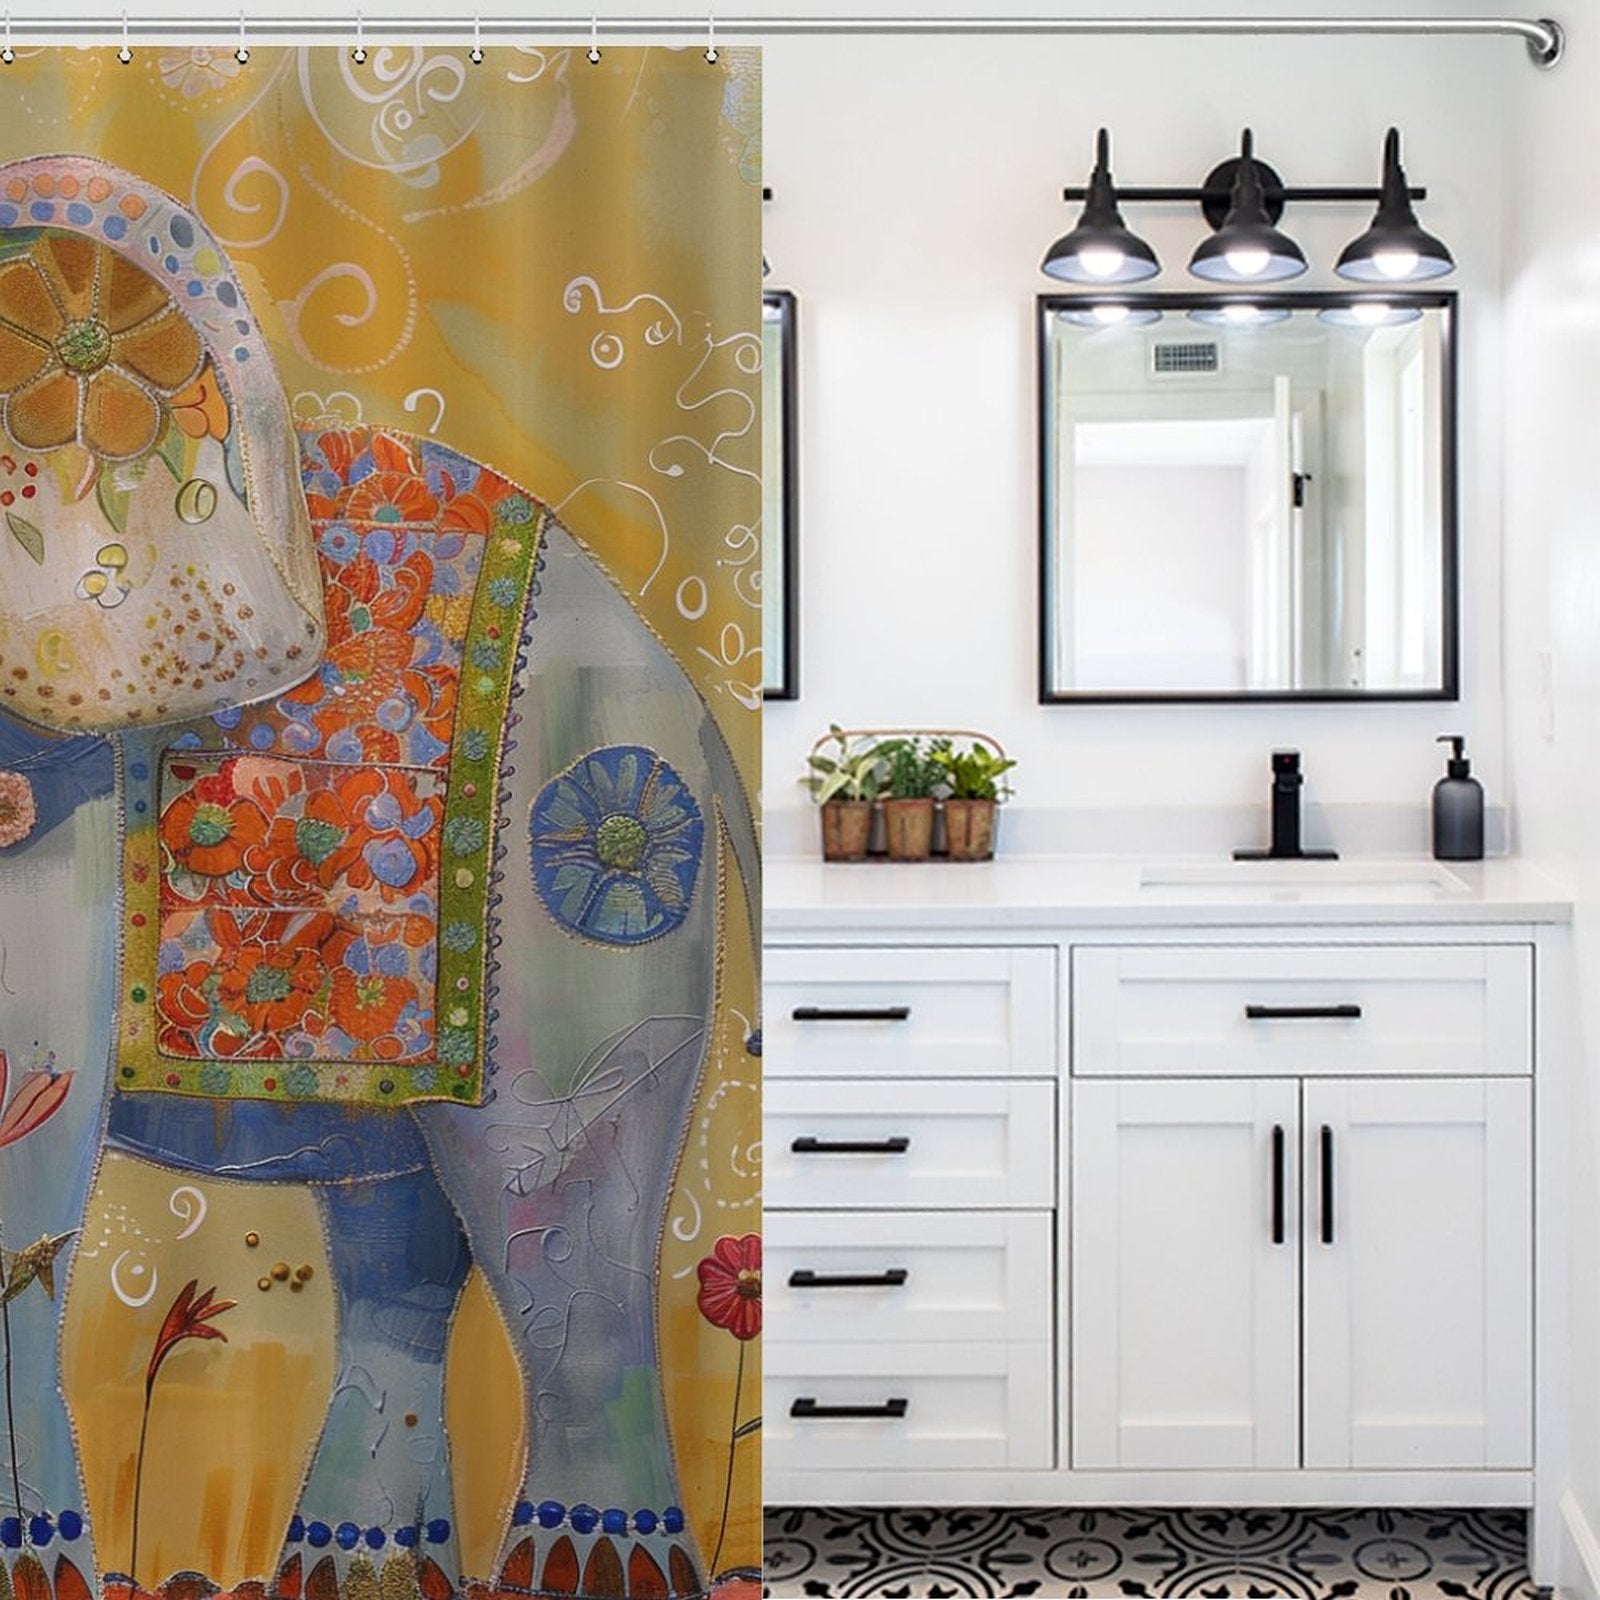 Artistic Cute Colourful Elephant Shower Curtain